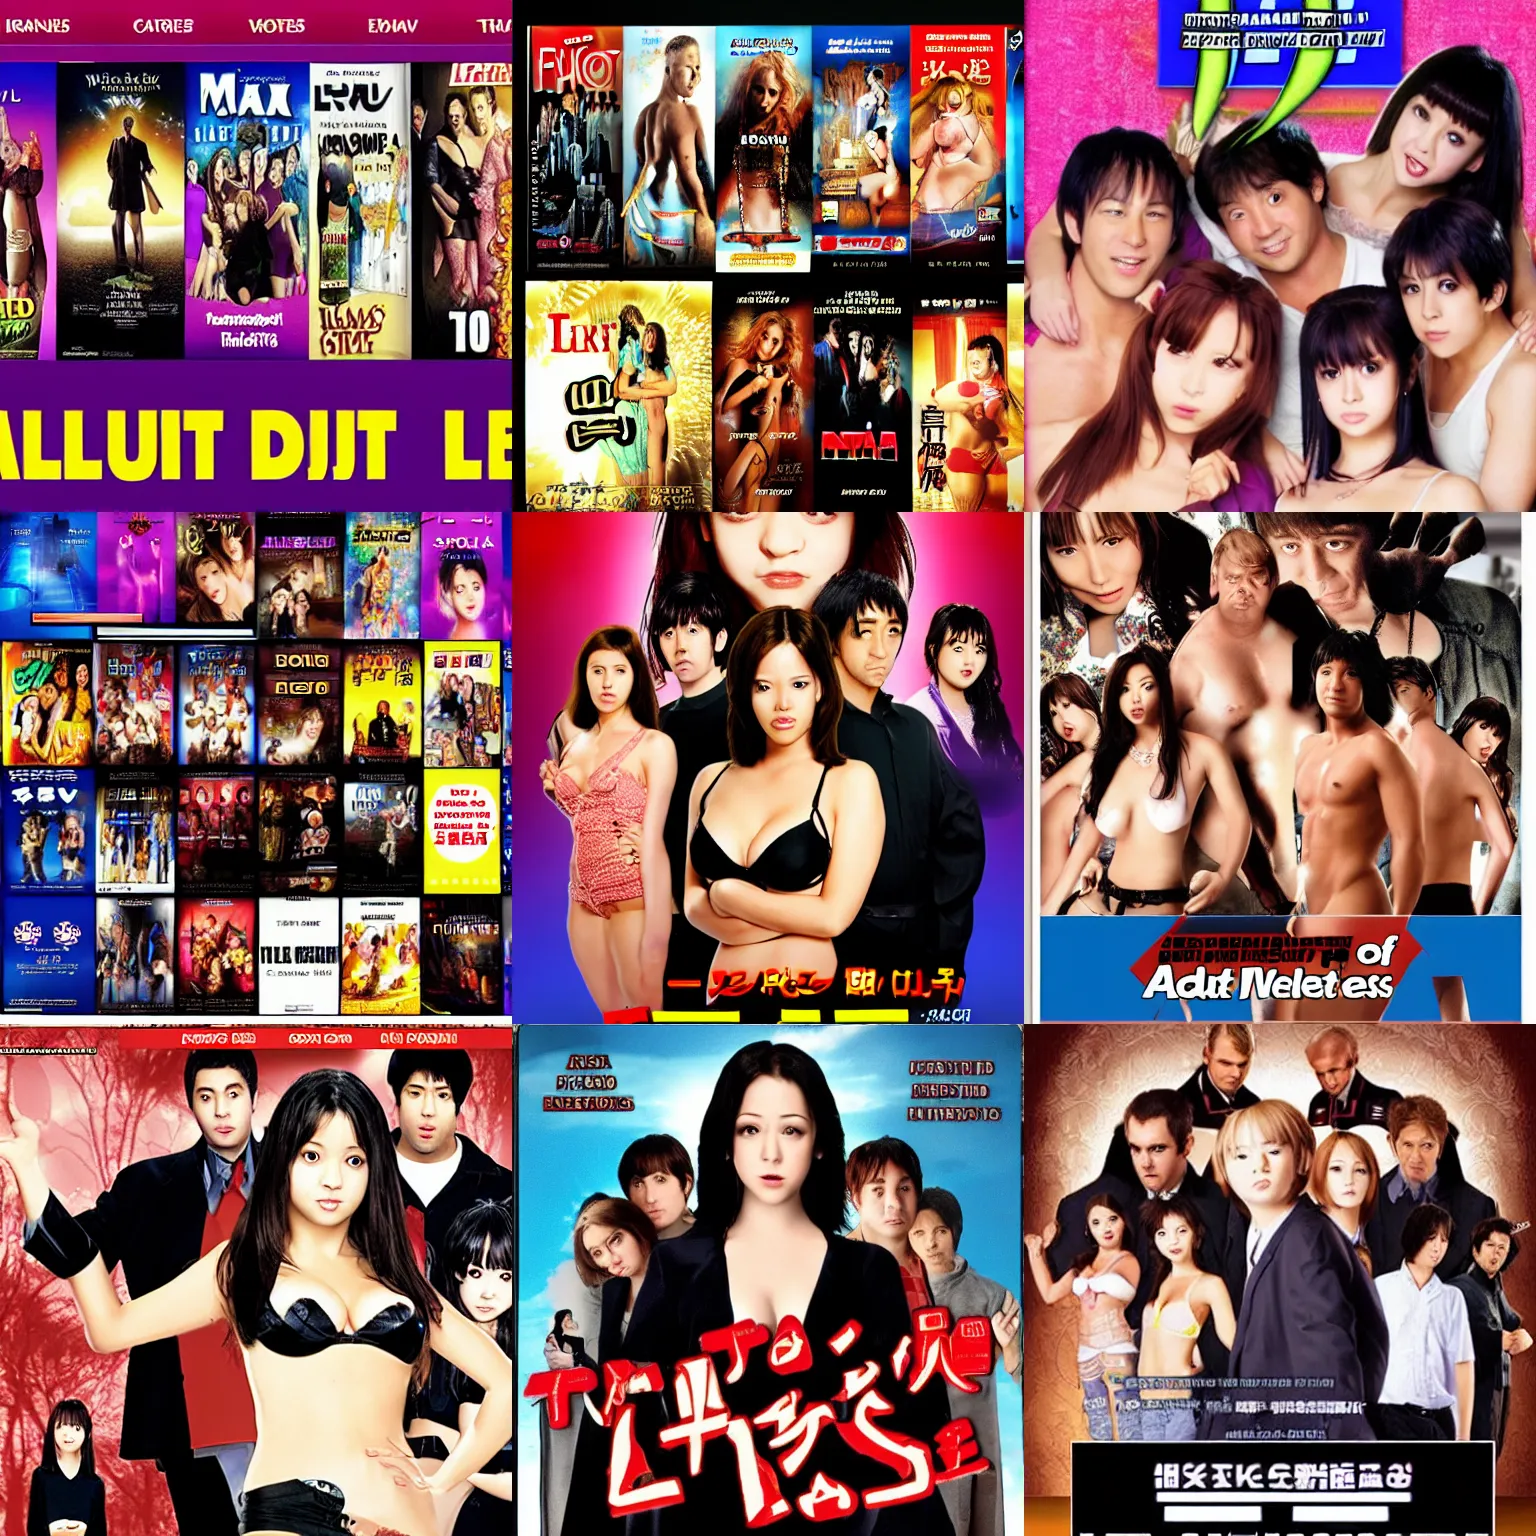 Prompt: list of adult dvd titles, website screenshot